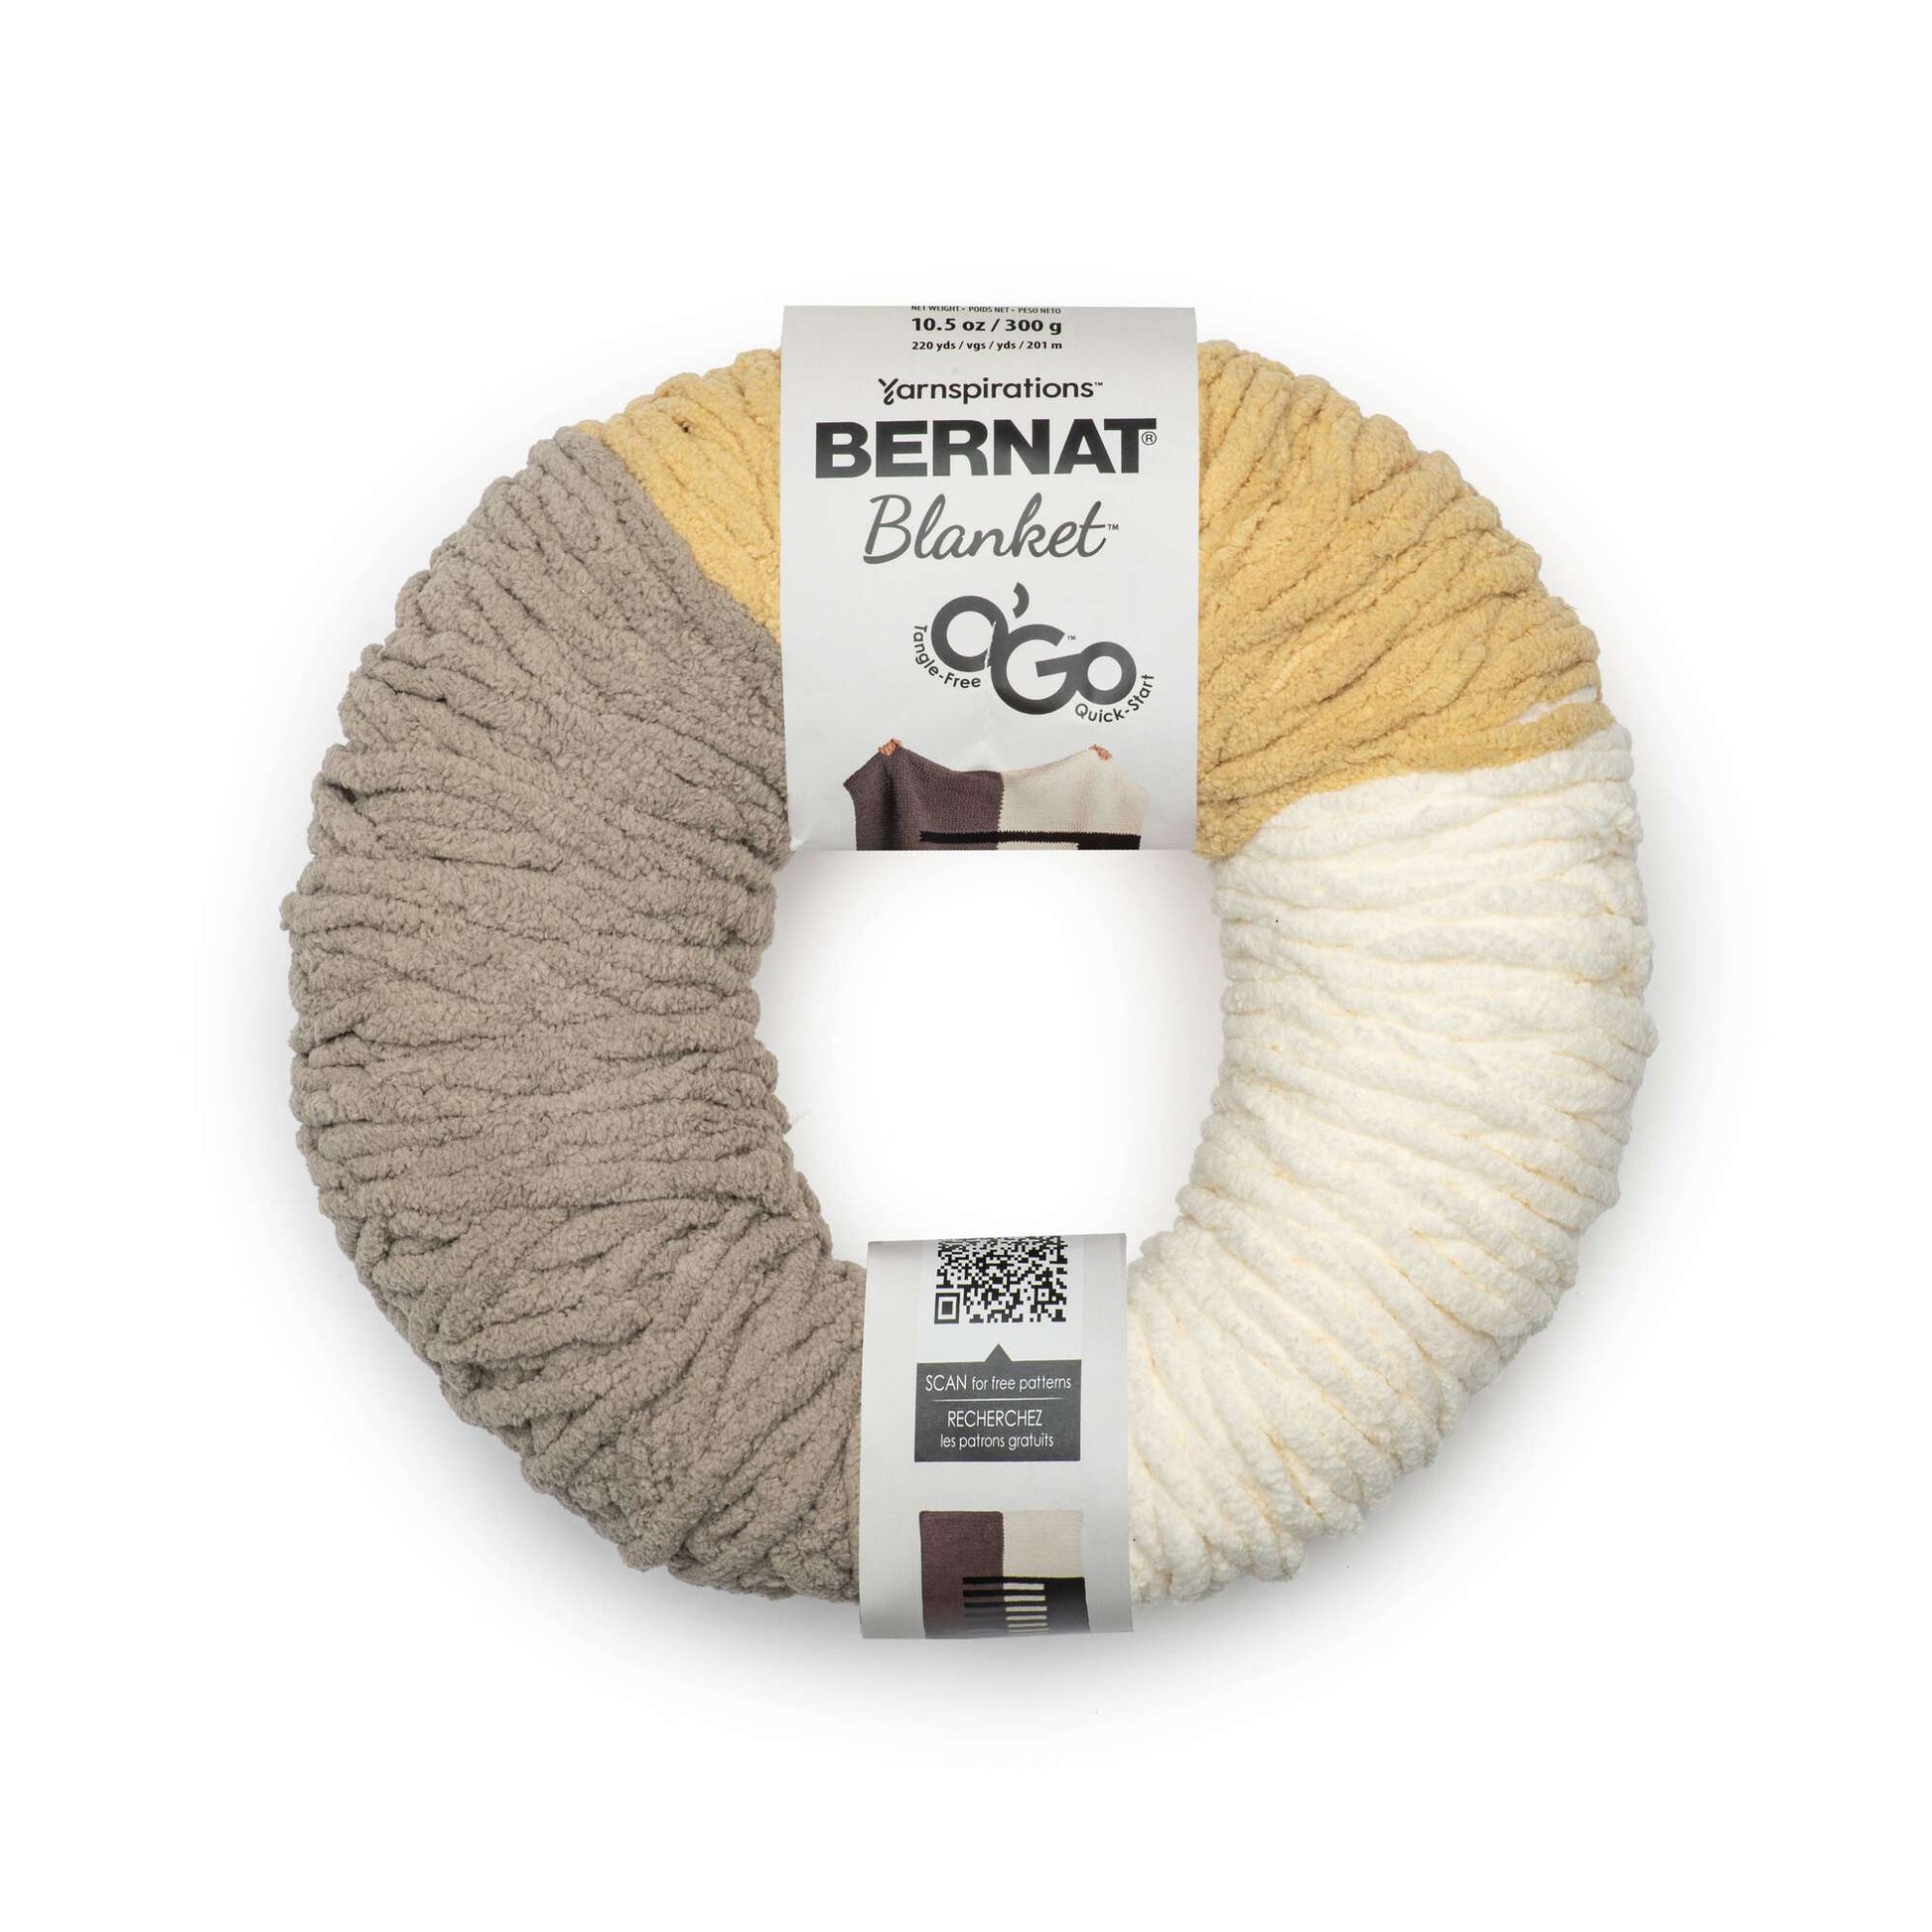 Bernat Blanket O'Go Yarn (300g/10.5oz) - Clearance Shades* Milk and Honey